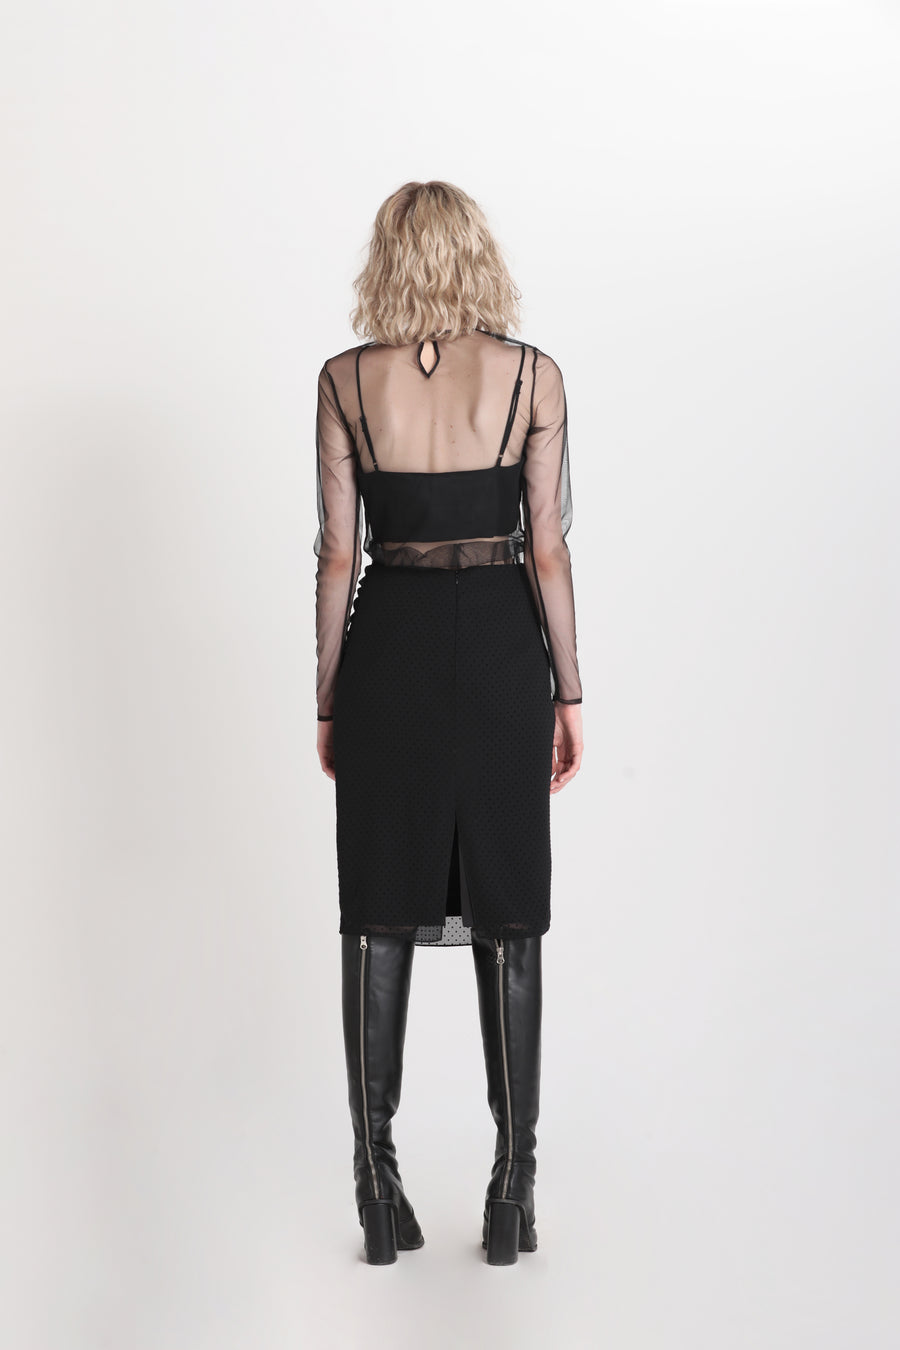 Black See-Through / Black Skirt